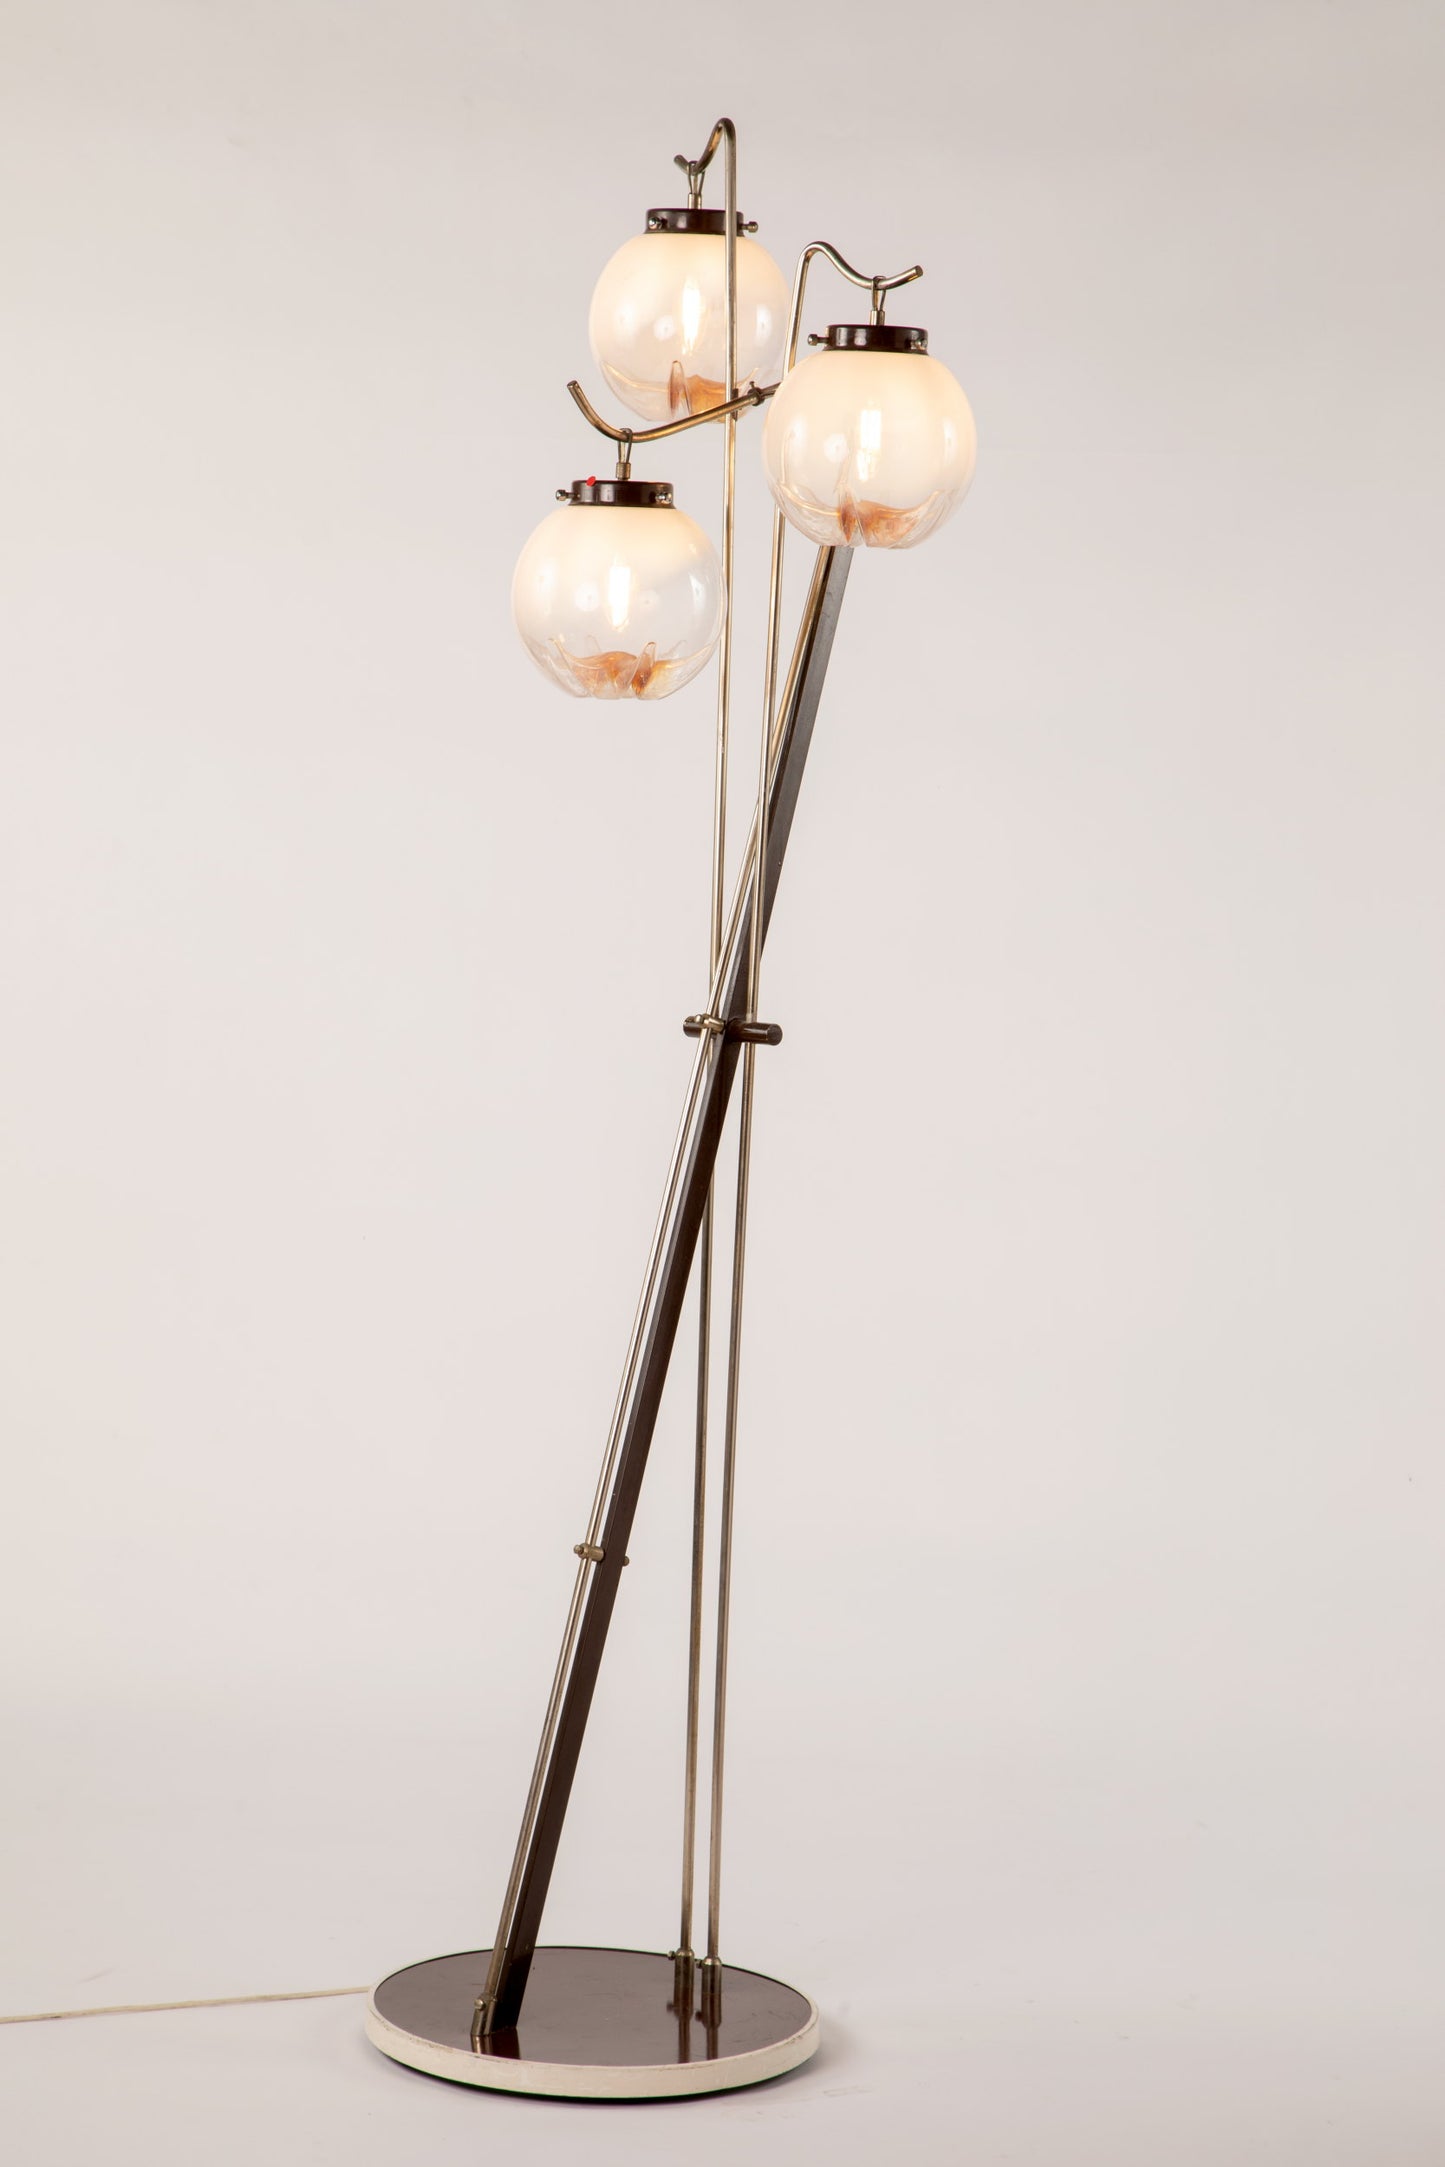 Goffredo Reggiani floor lamp from the 70s